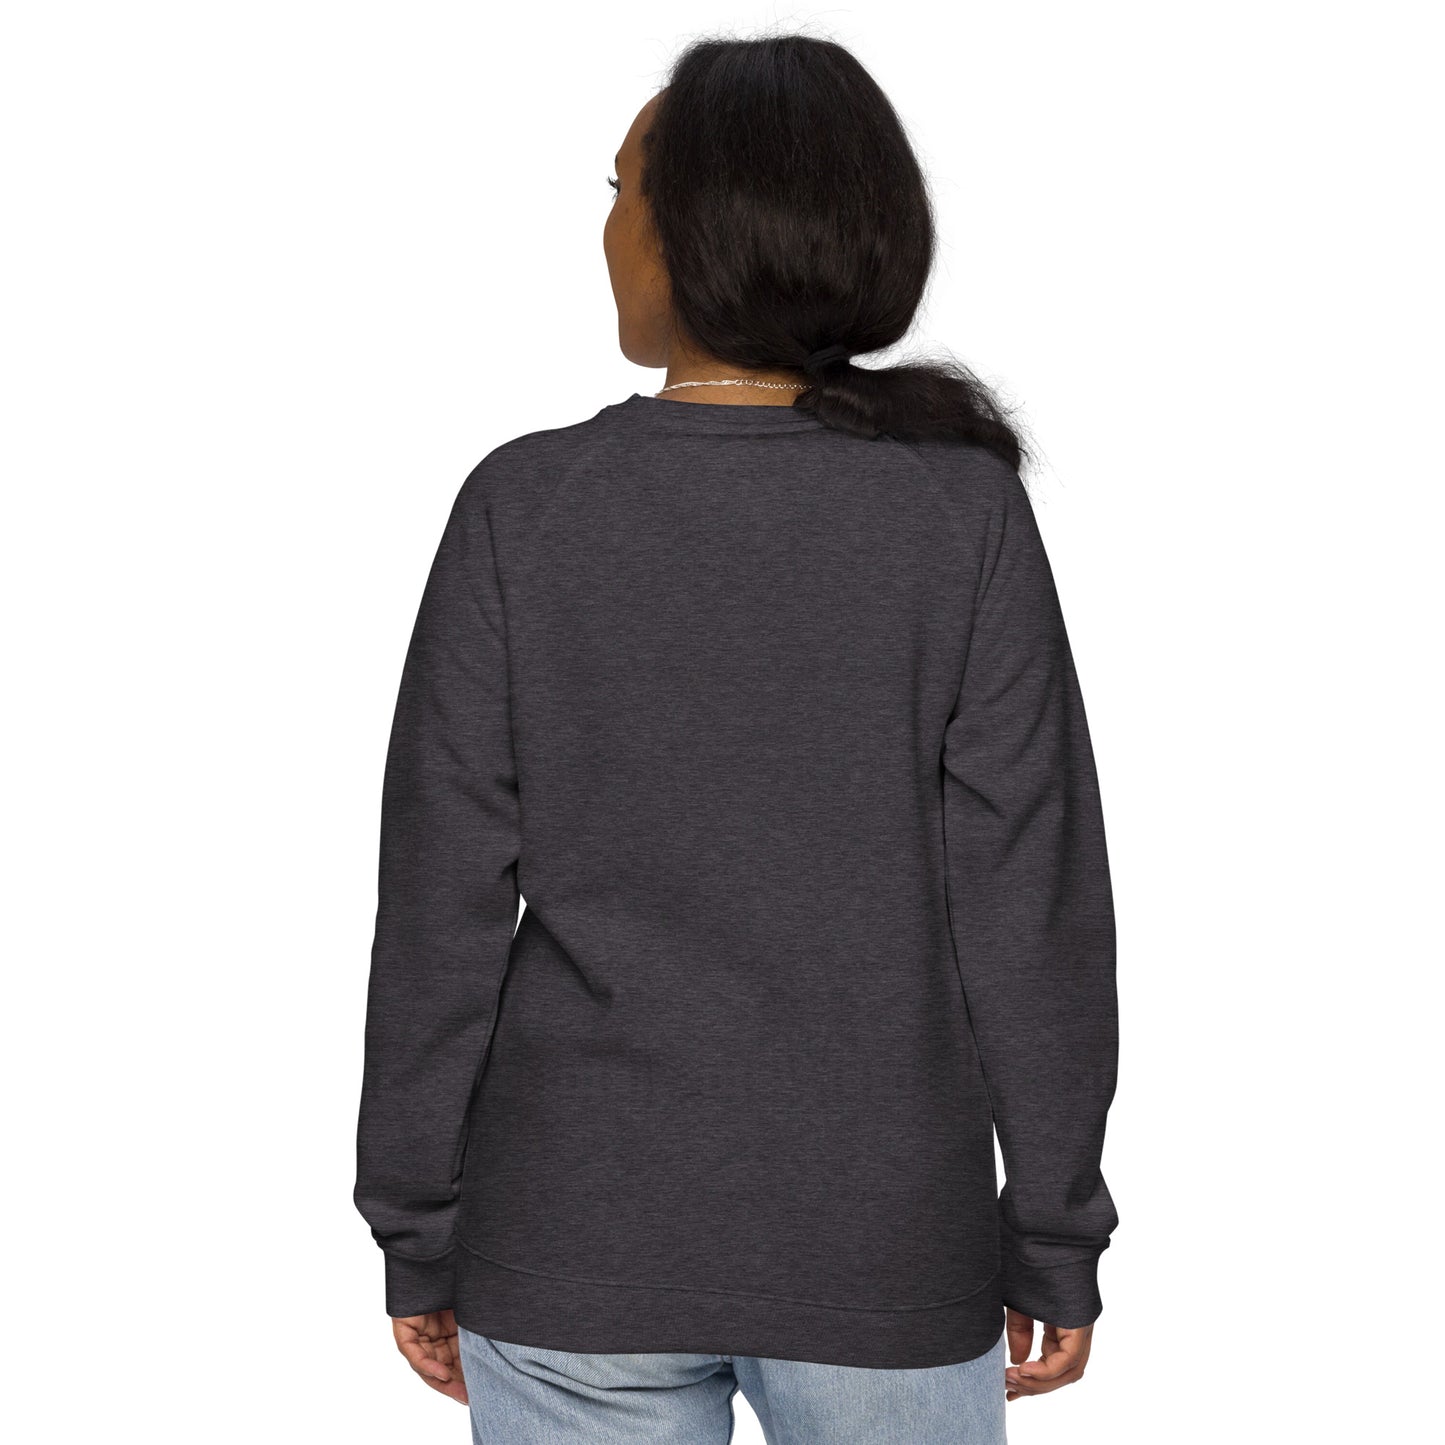 Unisex organic raglan sweatshirt S-3XL | Svadhisthana chakra